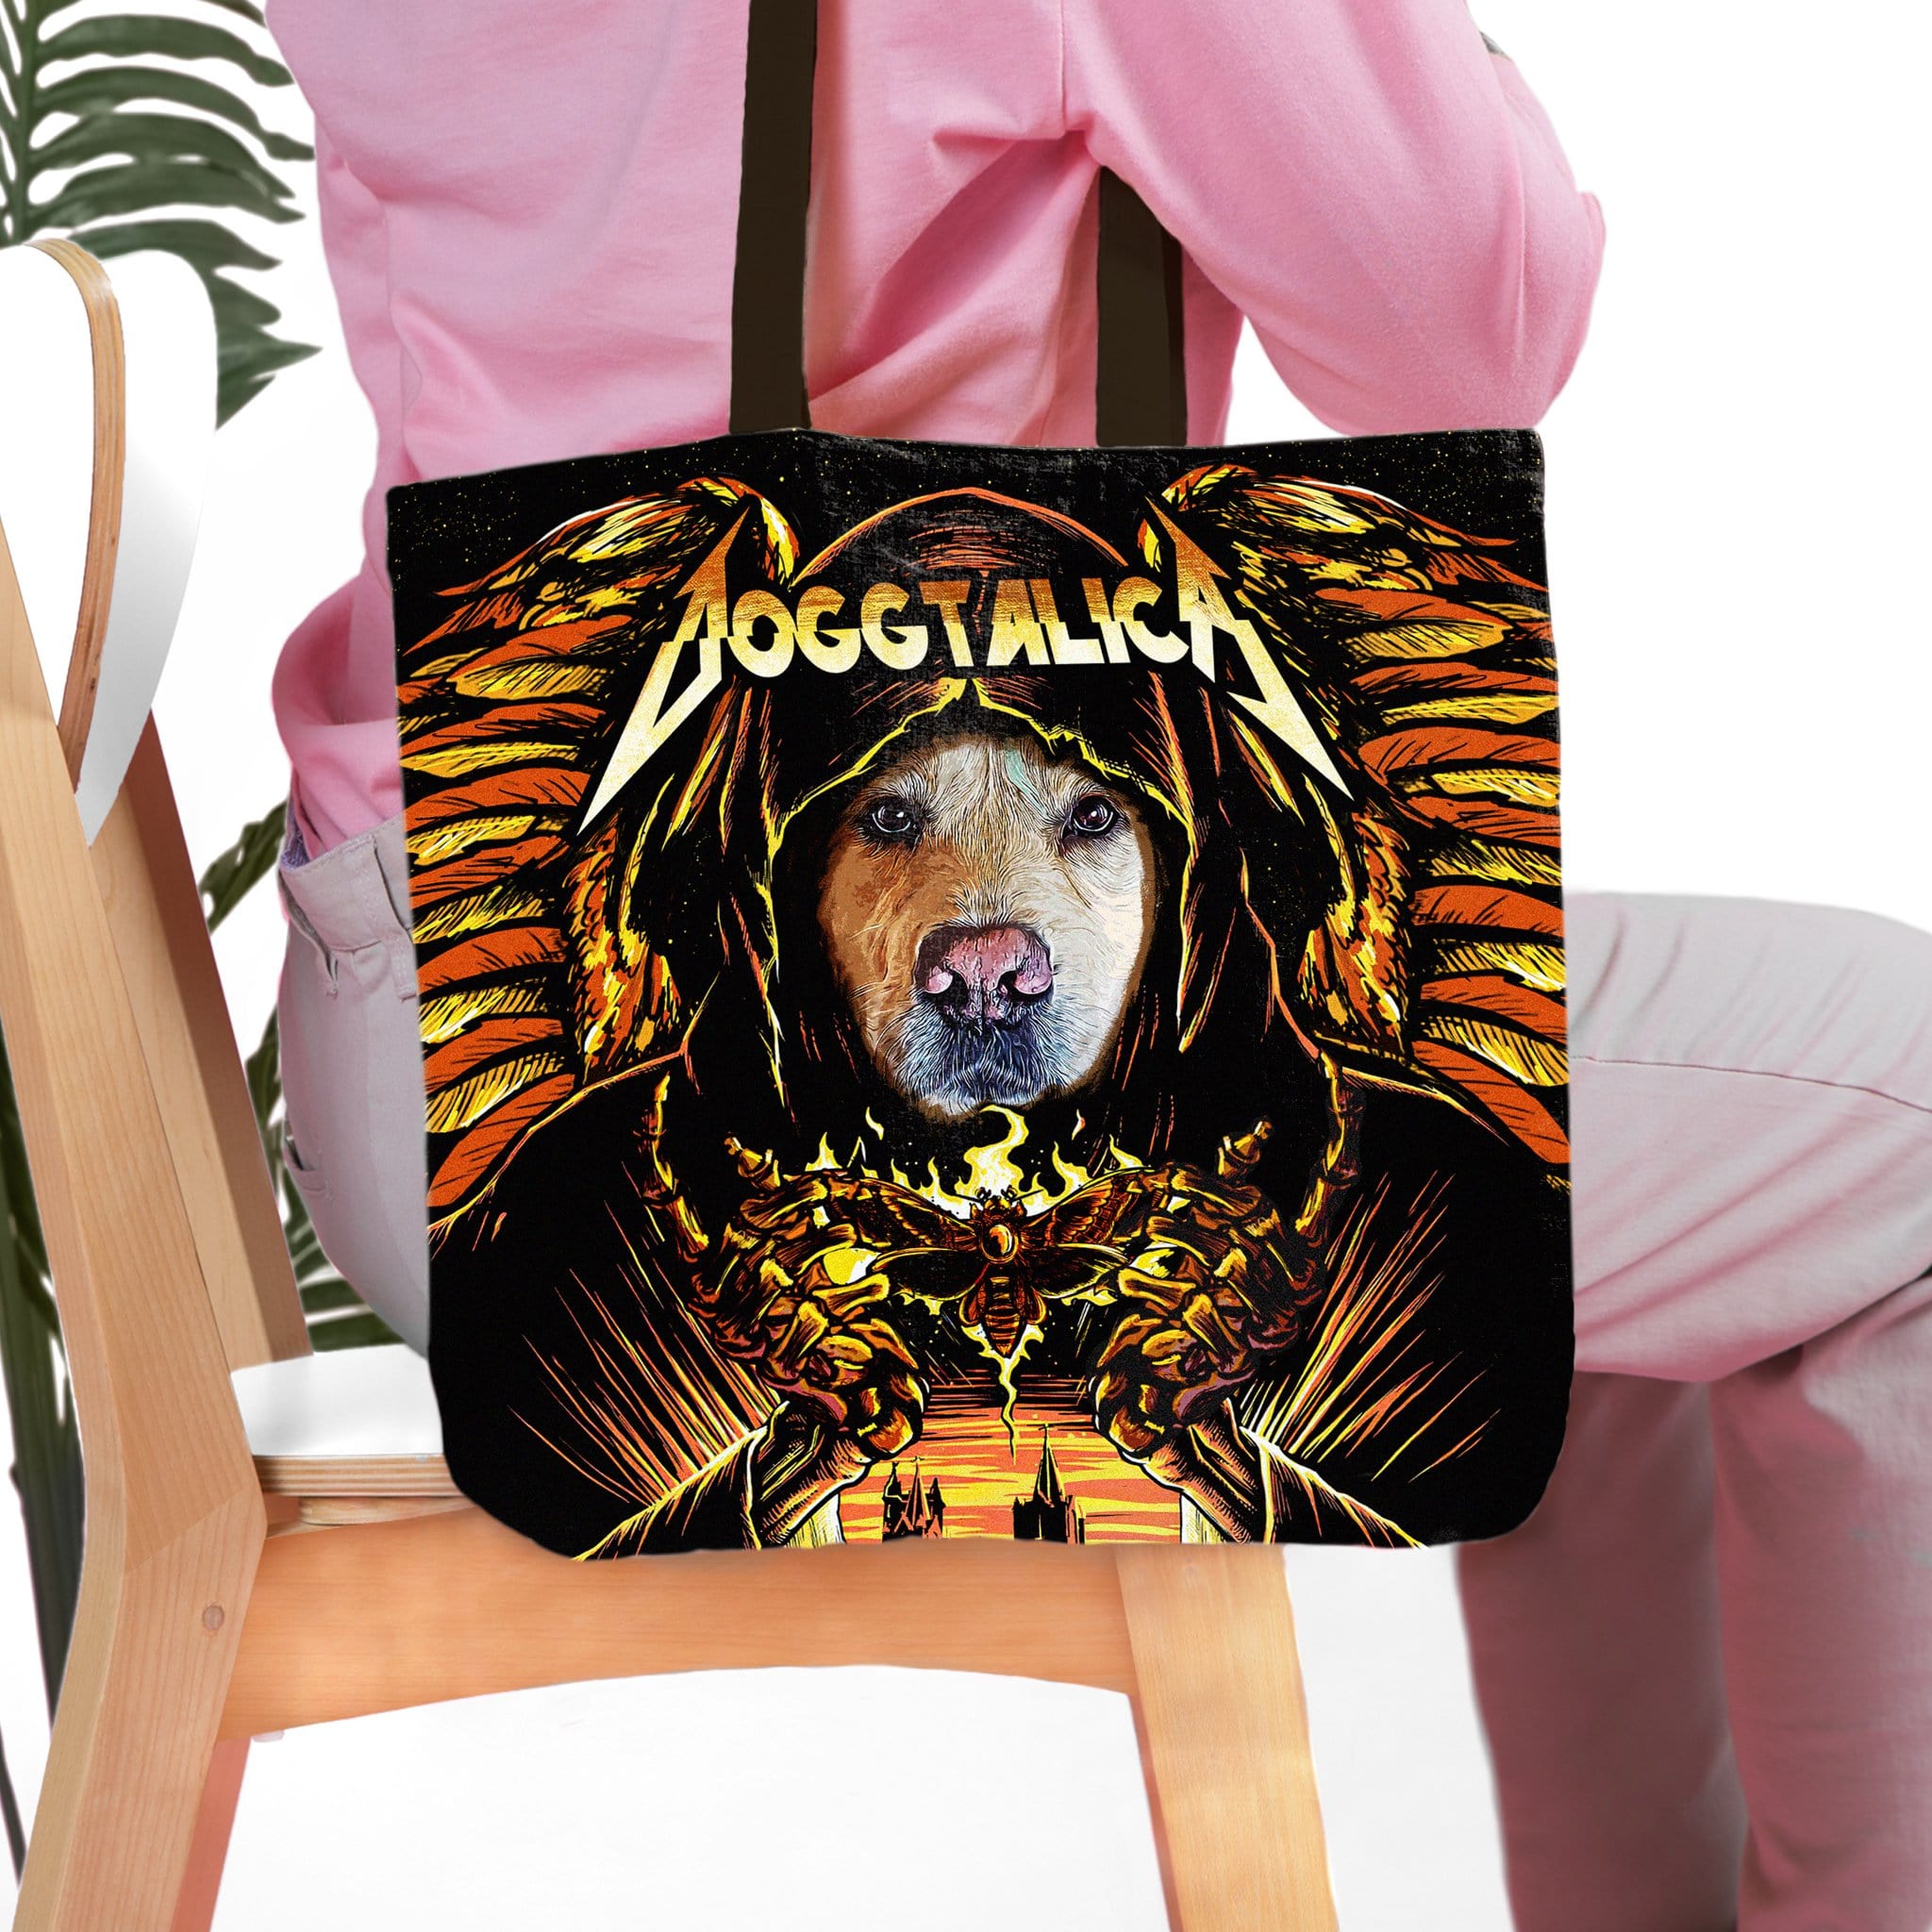 &#39;Doggtalica&#39; Personalized Tote Bag